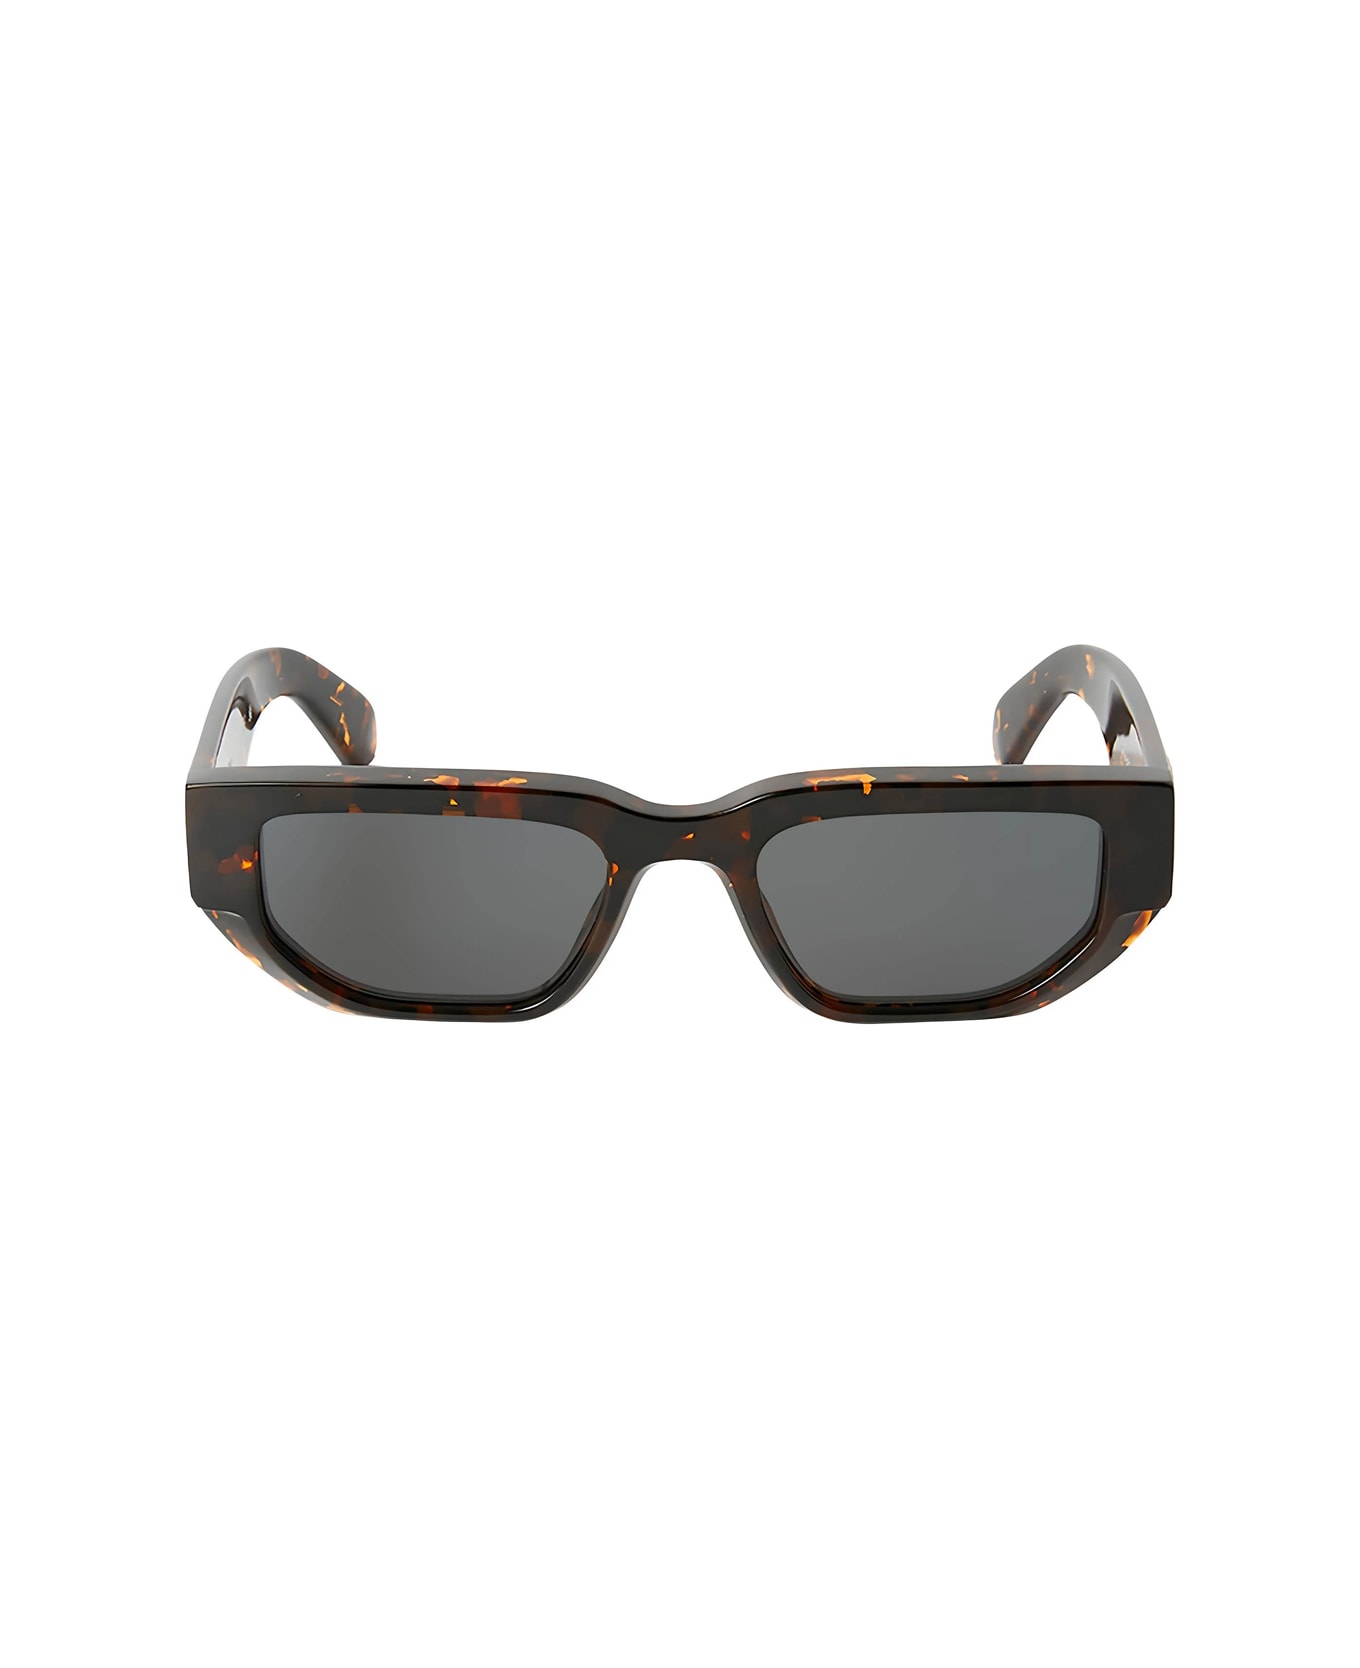 Off-White Oeri115 Greeley 6007 Havana Sunglasses - Marrone サングラス